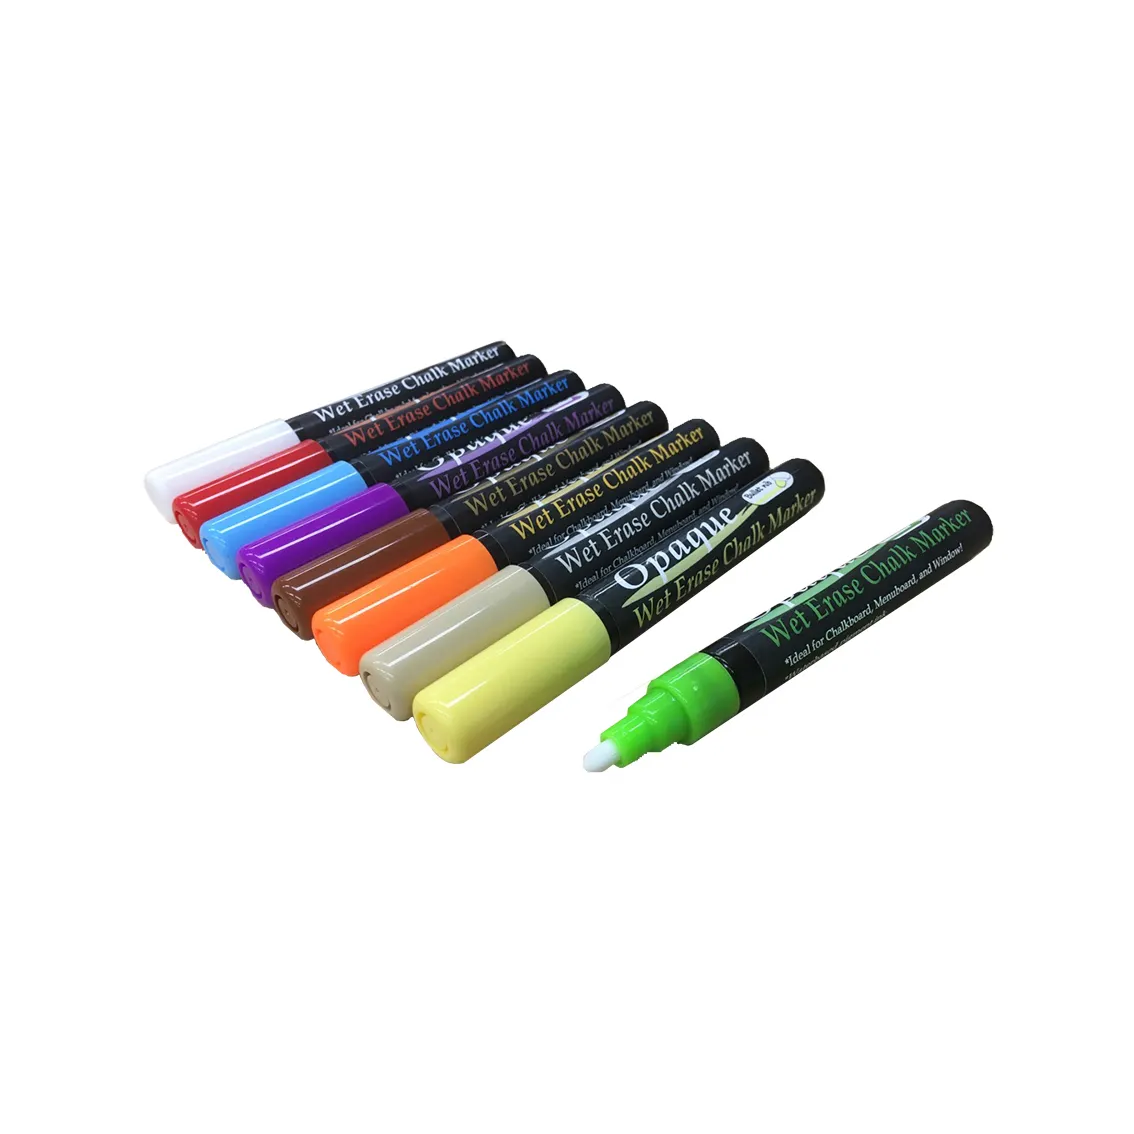 Japanc Direct printing various color liquid chalk marker pen for art